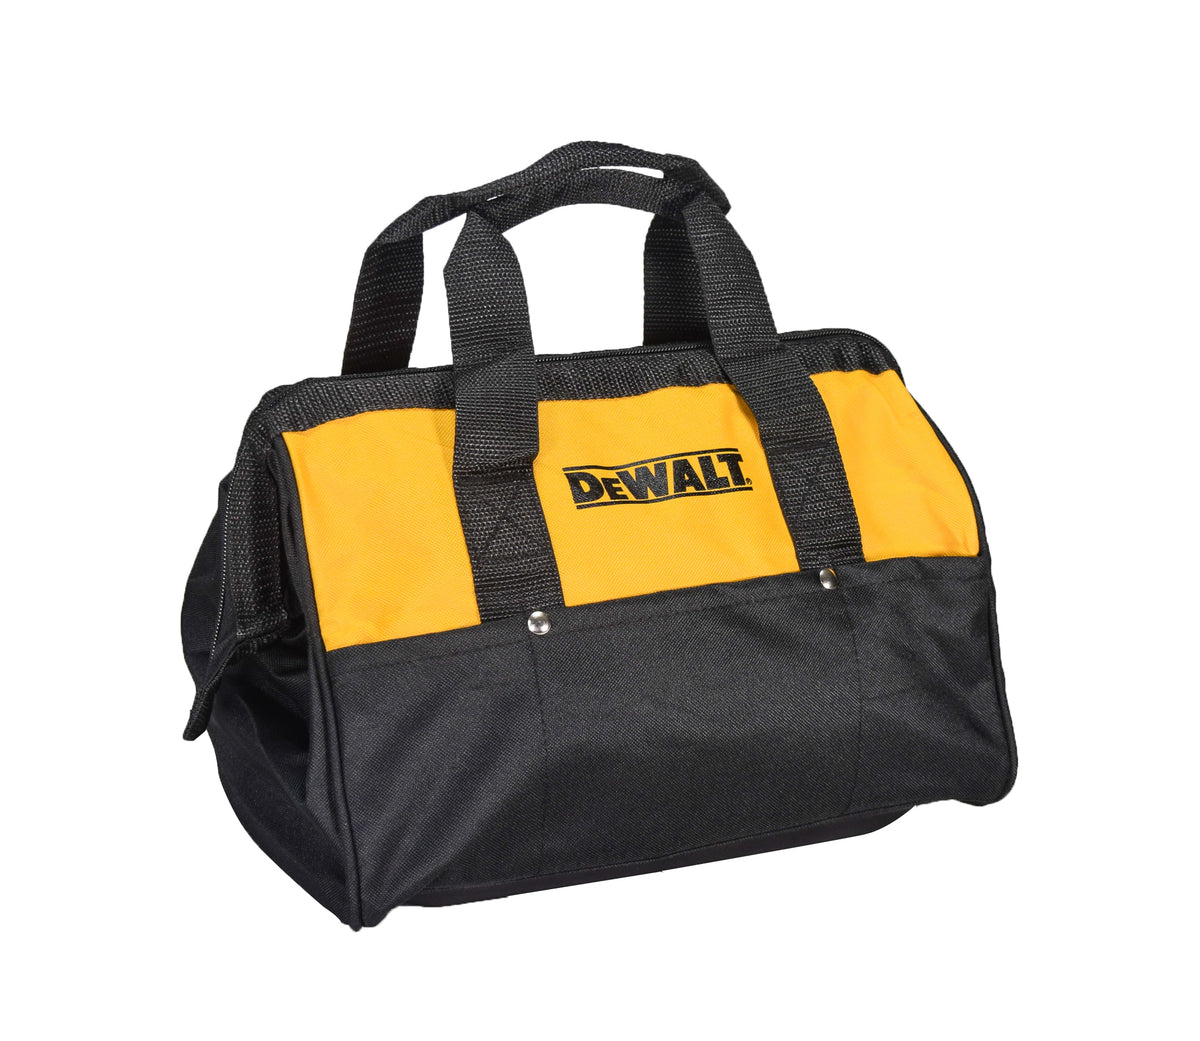 Dewalt Heavy Duty 12" x 9" Black/Yellow Power Tool Contractor Tool Bag